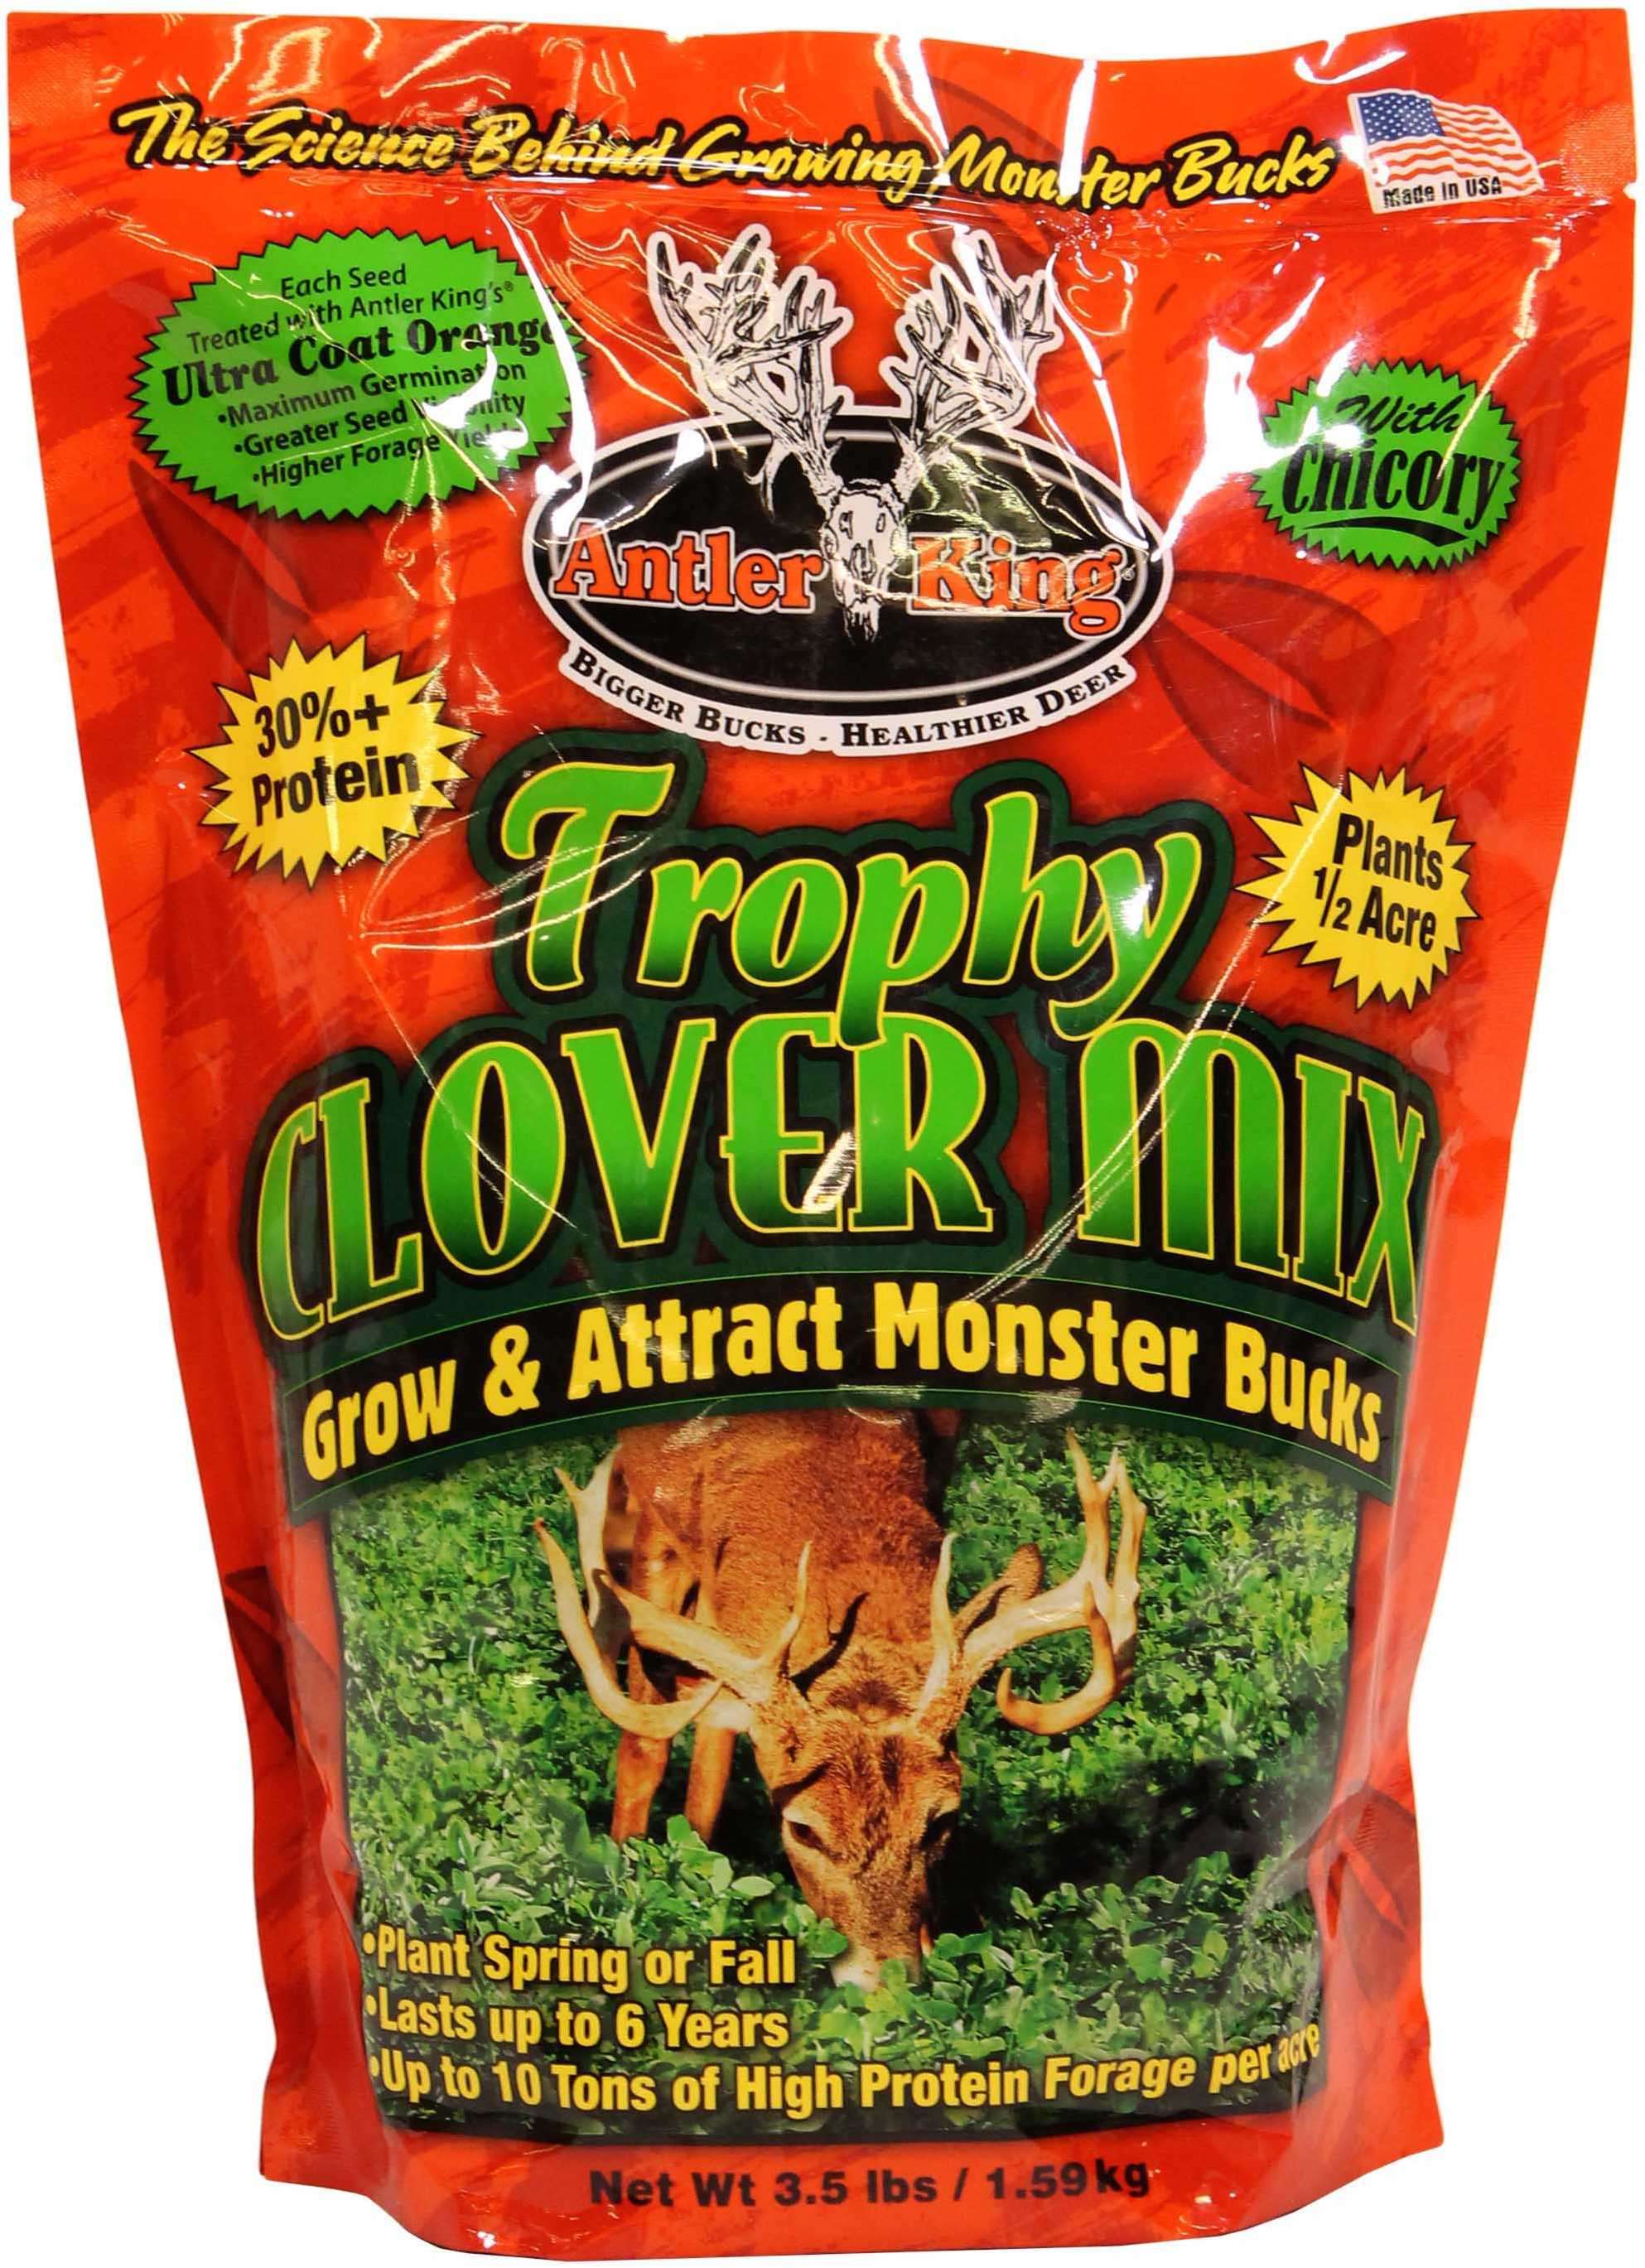 Antler King Food Plot Seed Trophy Clover Mix Md: TC35